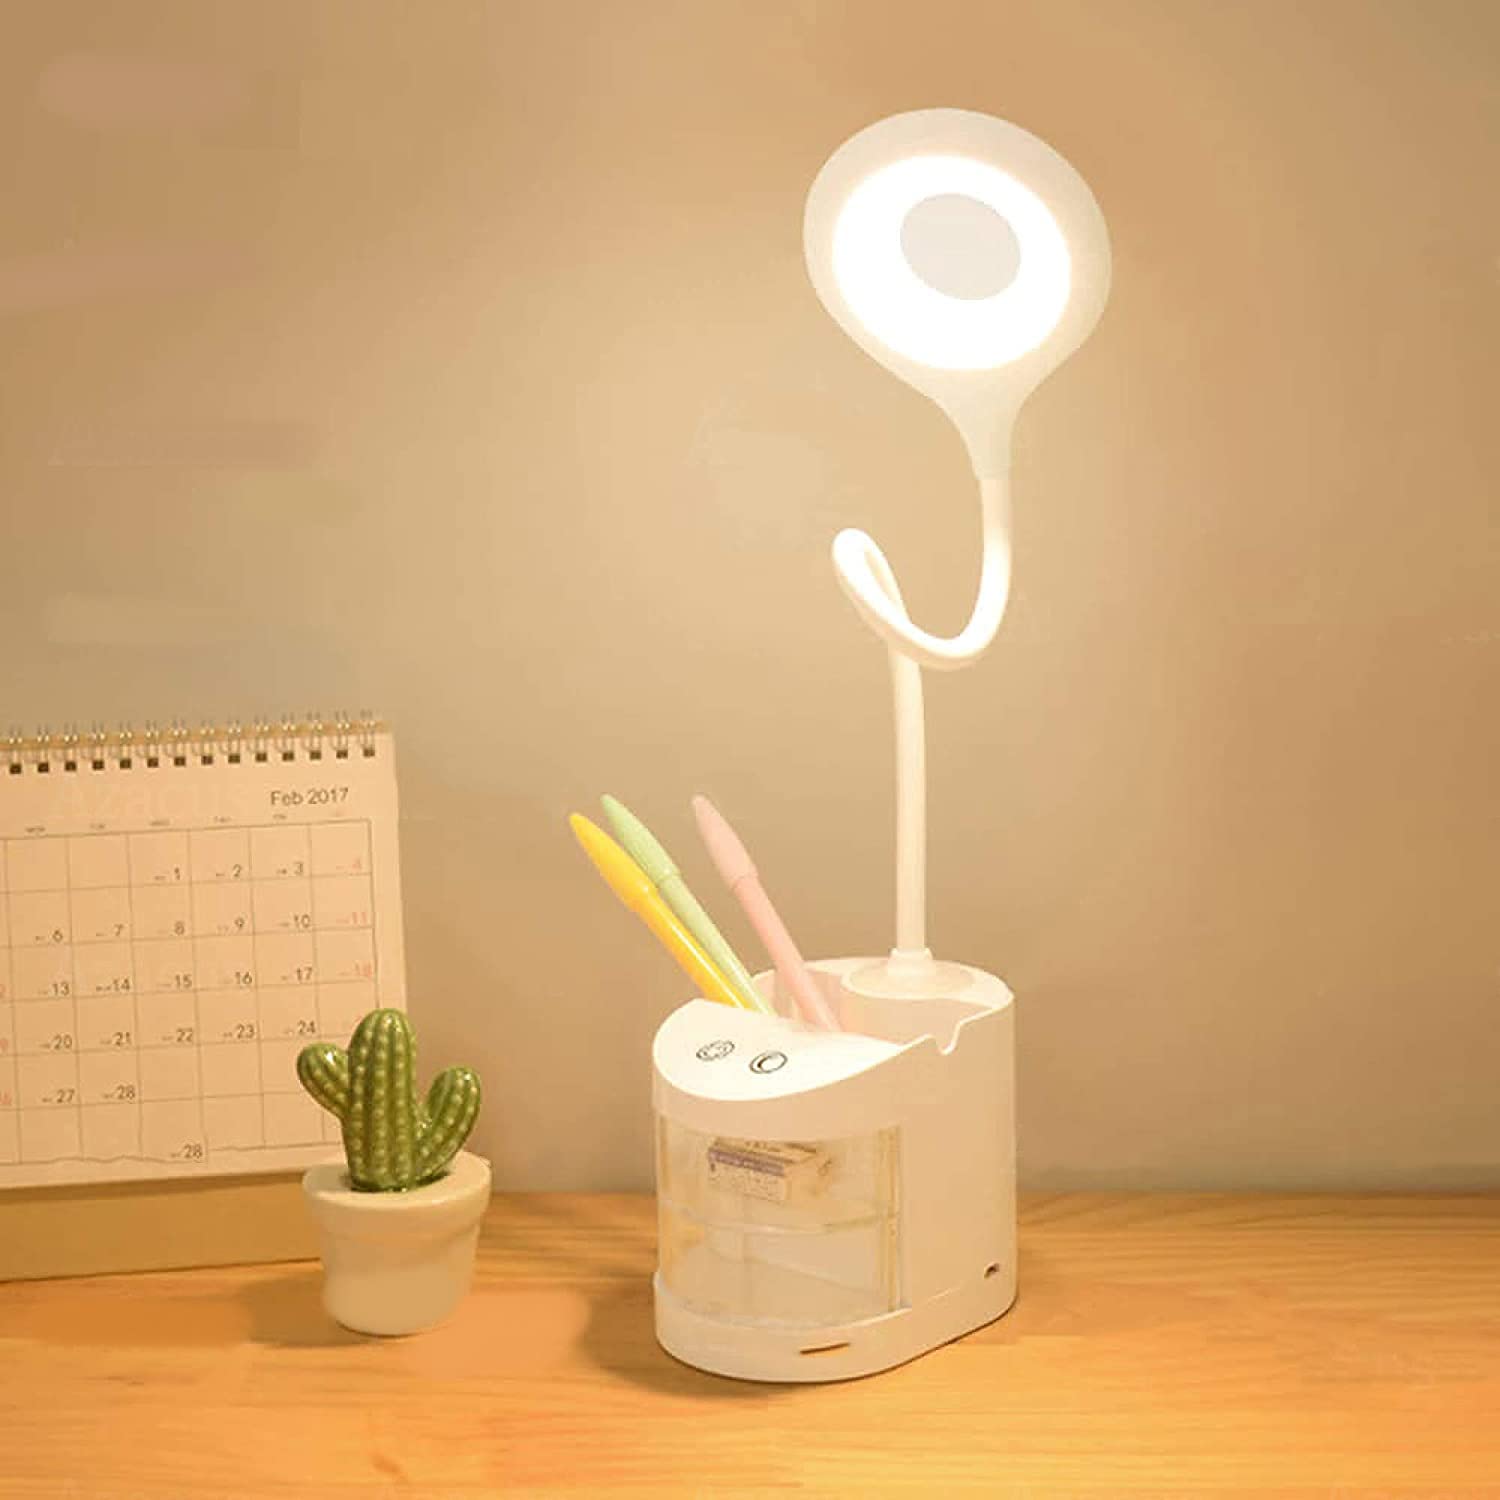 led lamp office gadgets 